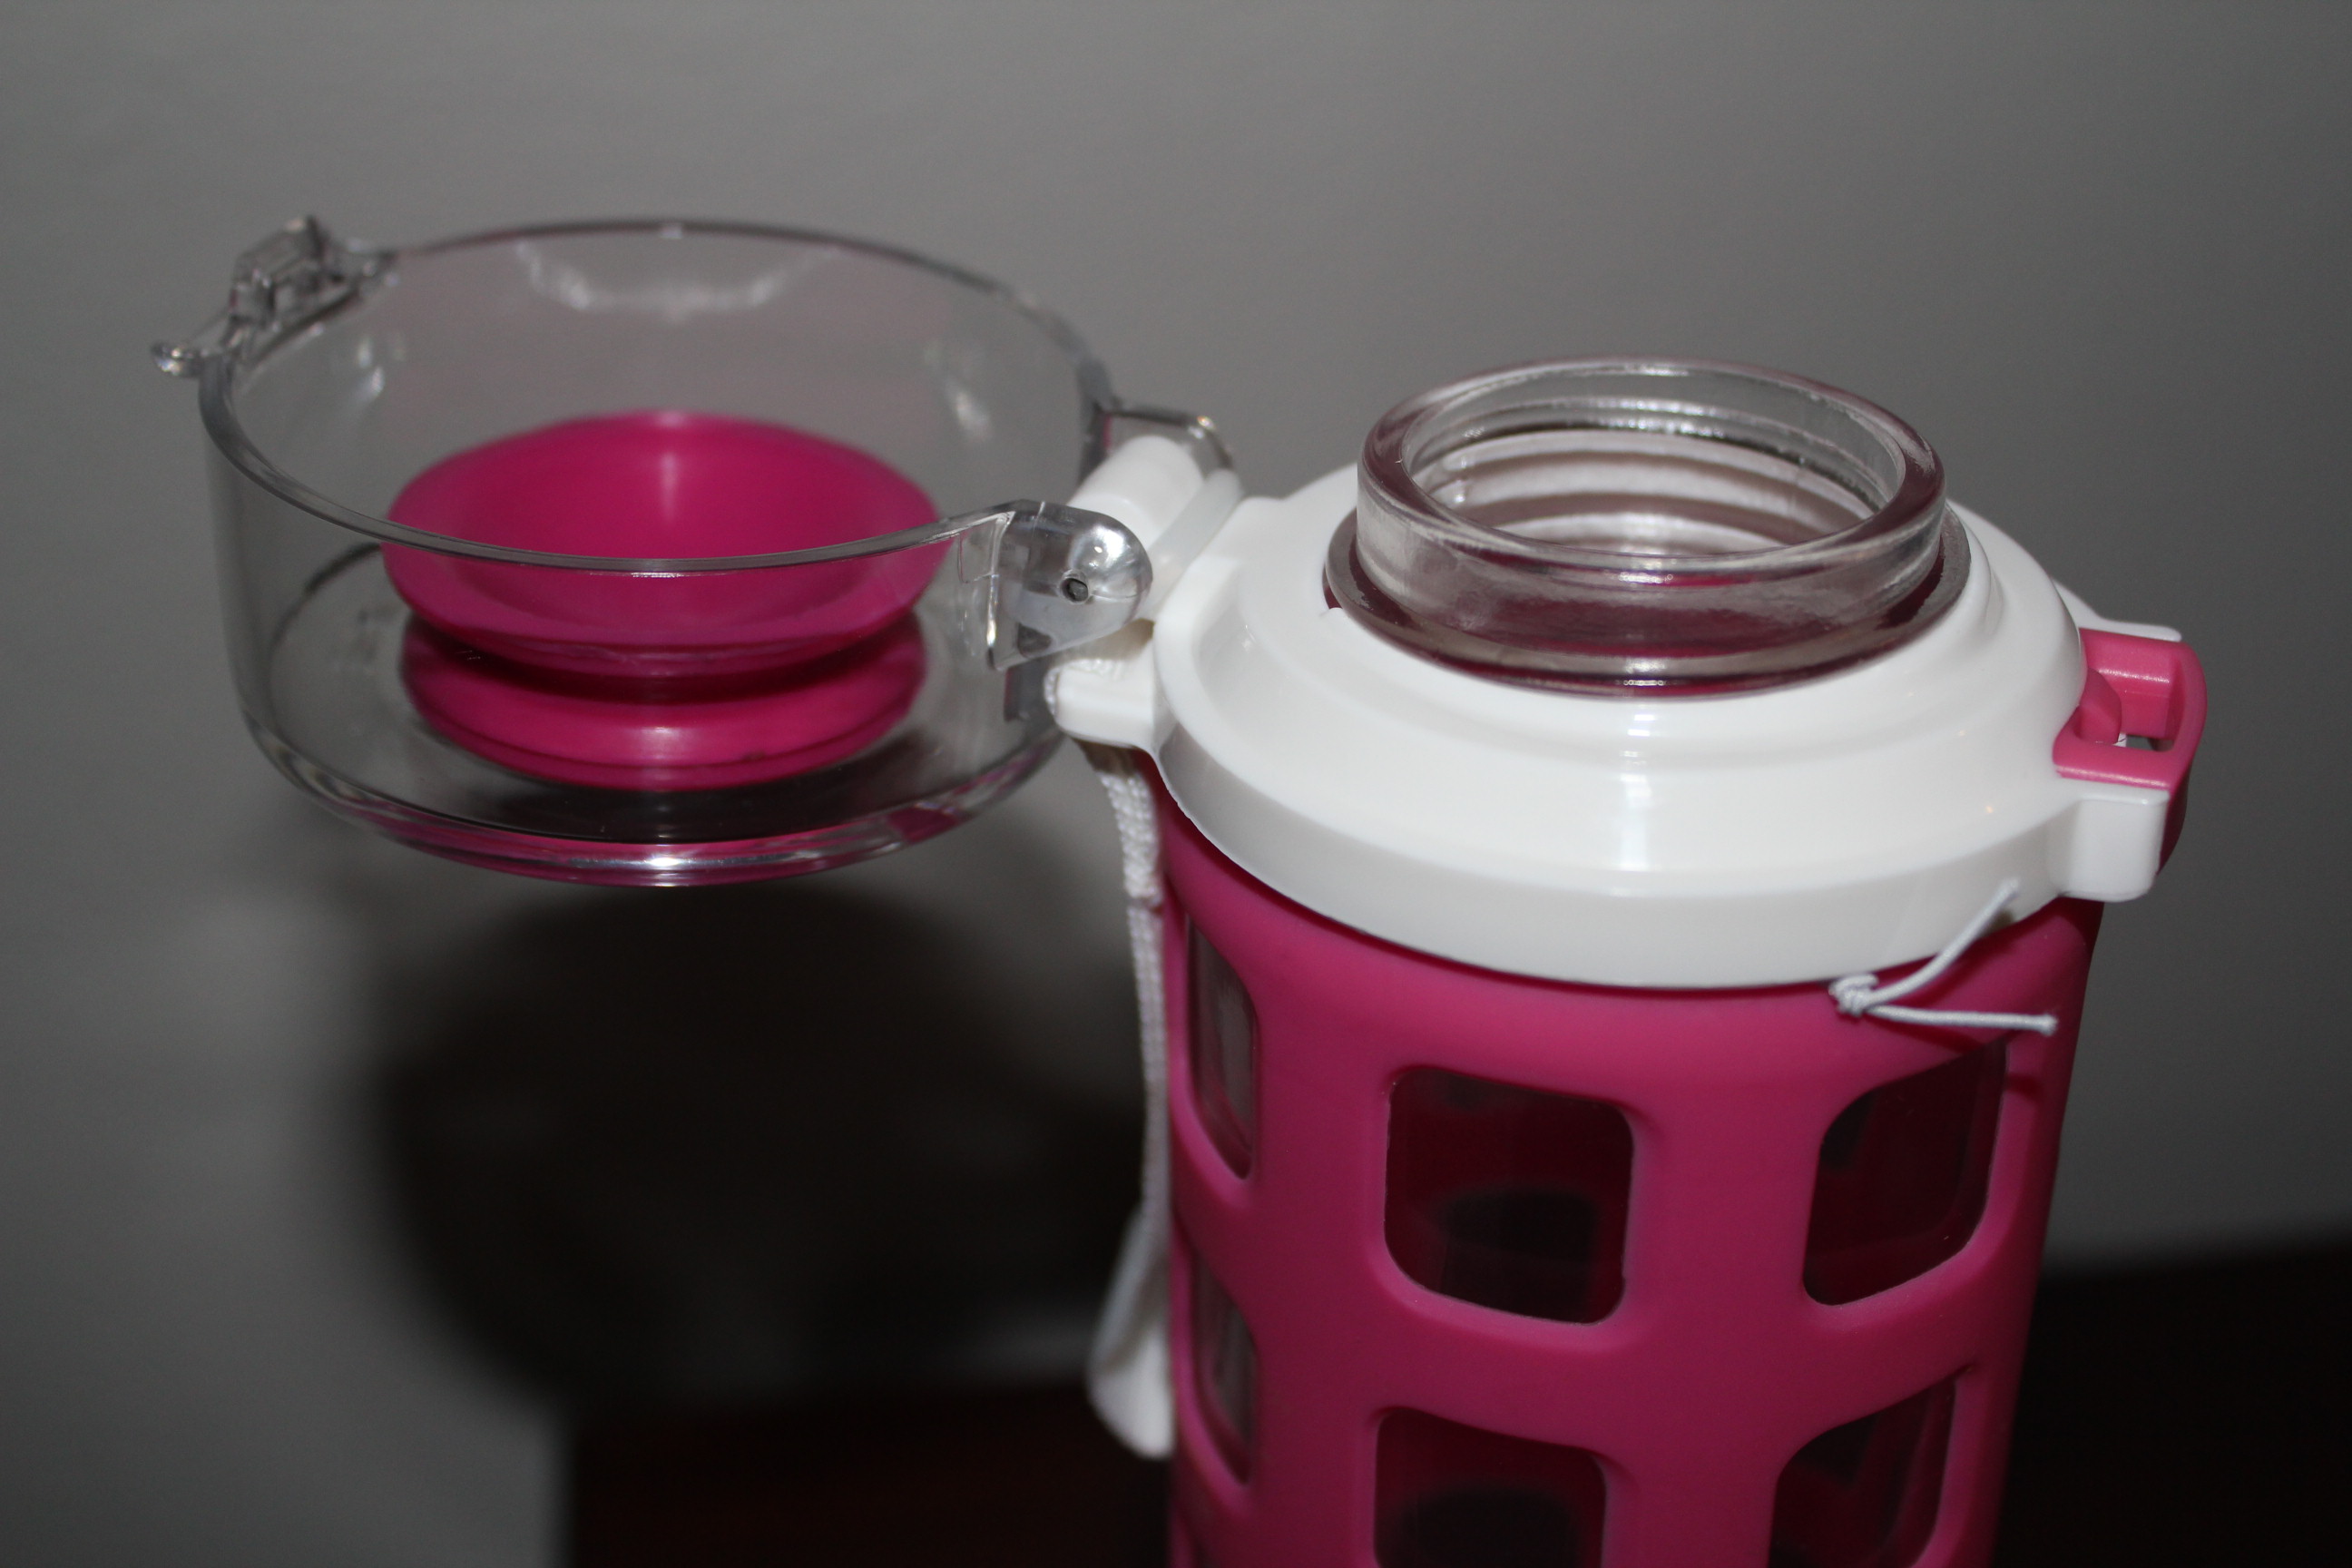 Ello Syndicate BPA-Free Glass Water Bottle with Flip Lid, 20 oz